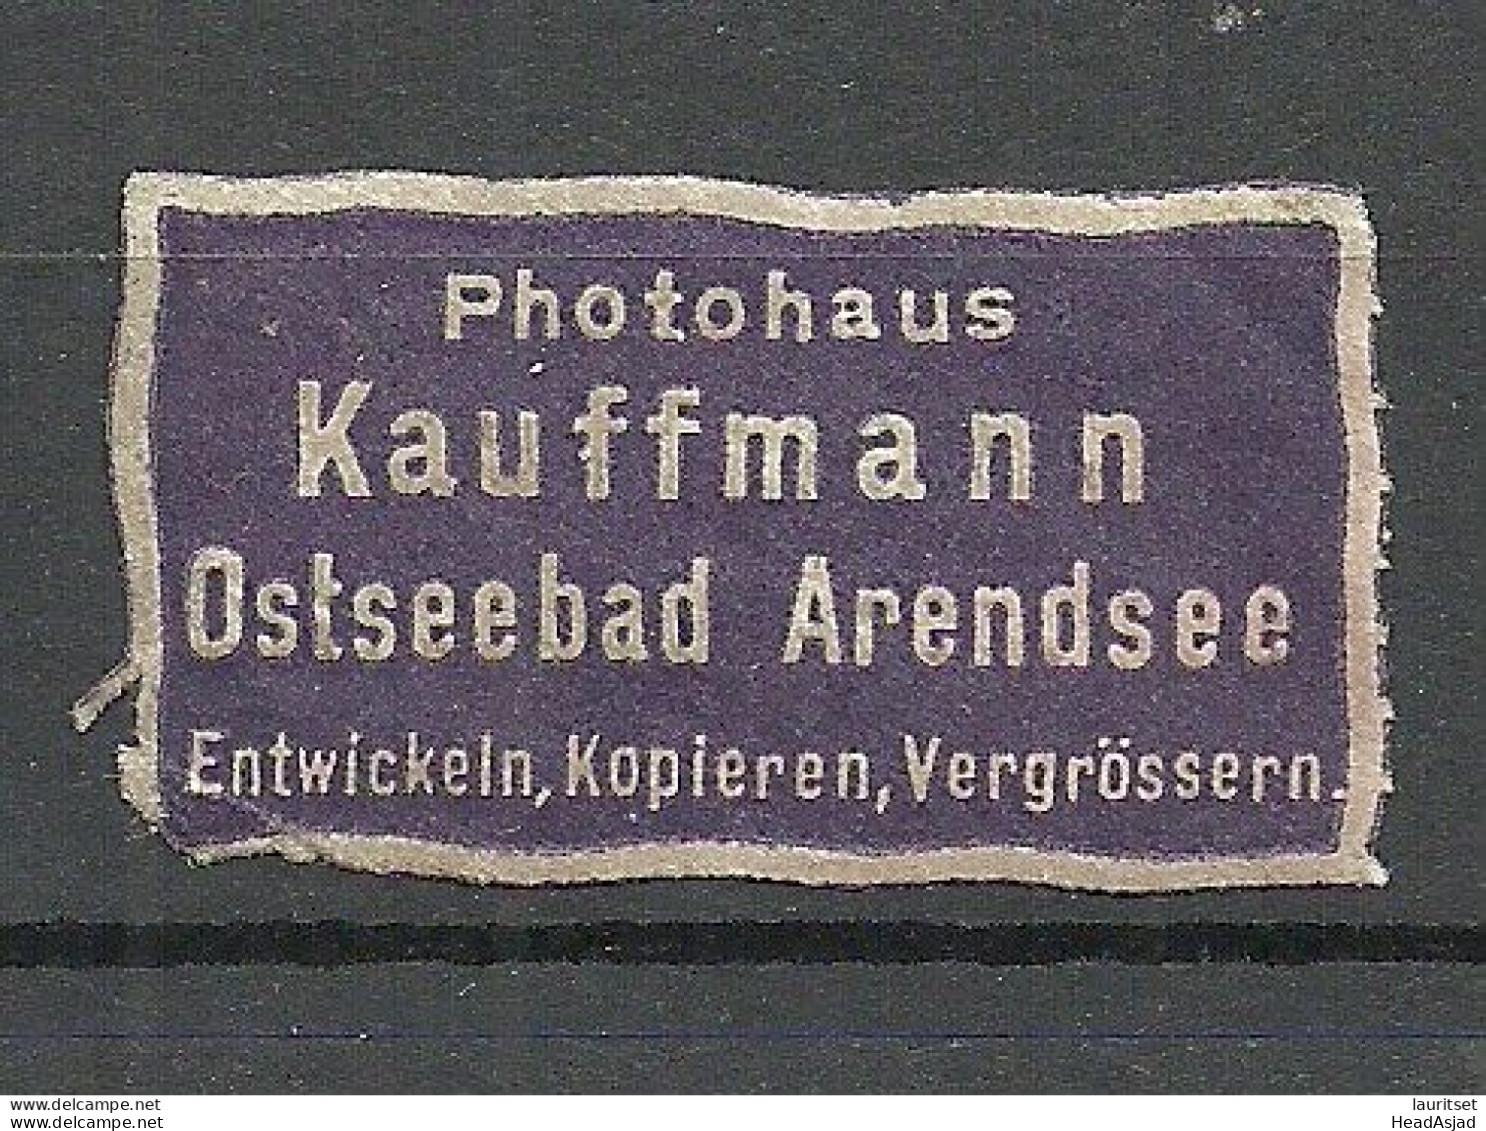 Deutschland Germany Photohaus Kauffmann Ostseebad Arendsee Reklamemarke Siegelmarke Seal - Autres & Non Classés